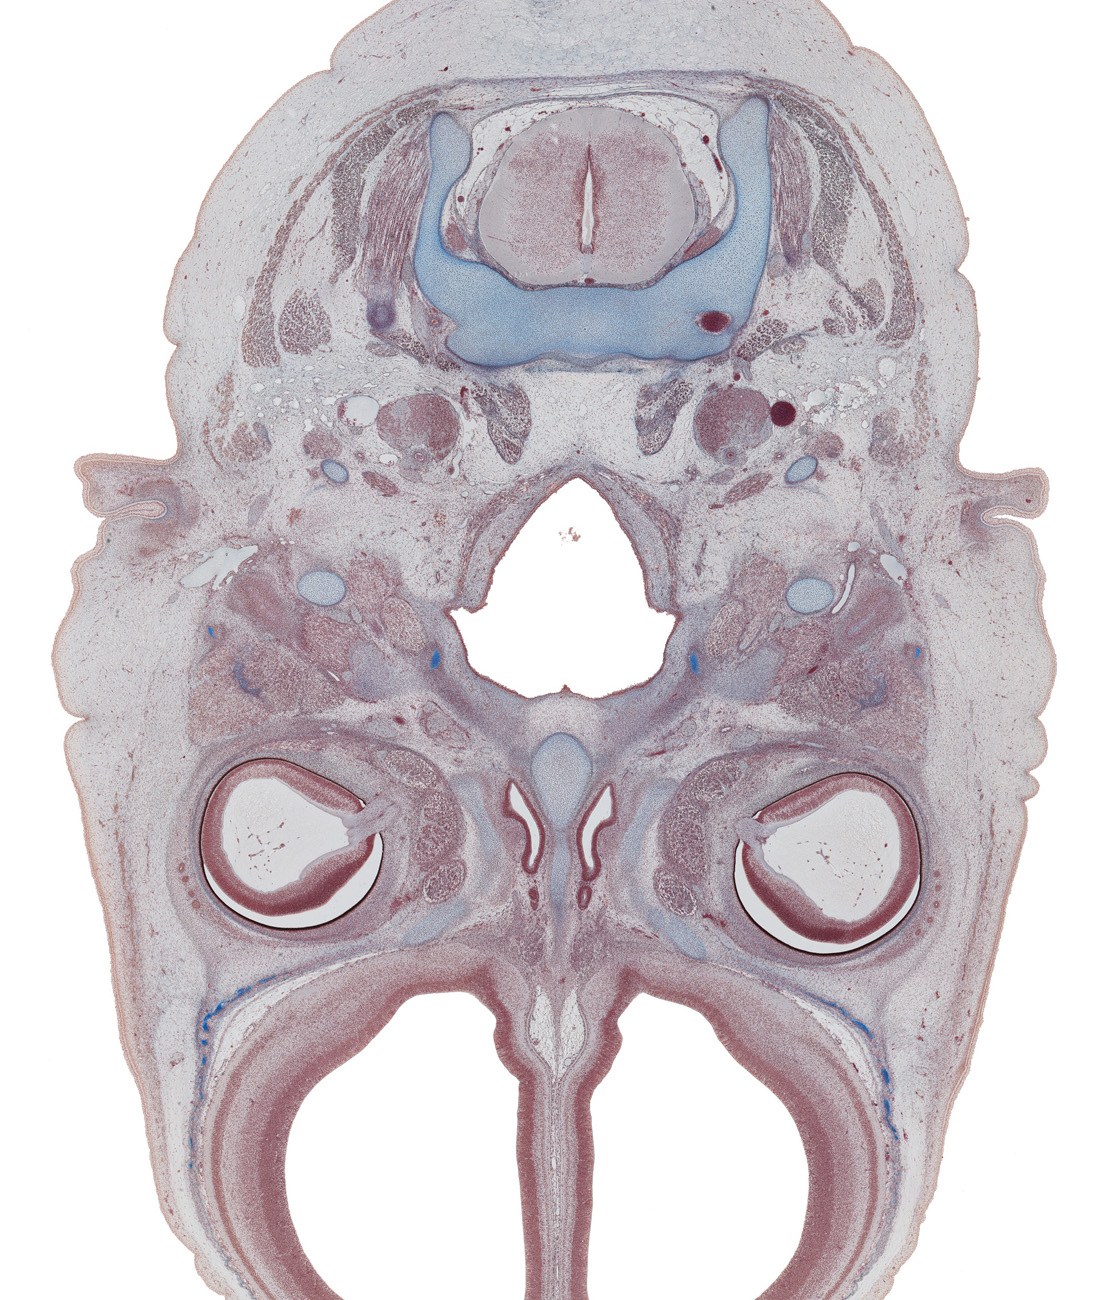 C-2 / C-3 interganglion region, blood vessels in vitreous body, centrum of C-2 vertebra (axis), ethmoid, extrinsic ocular muscle(s), falx cerebri region, glossopharyngeal nerve (CN IX), inferior ganglion of vagus nerve (CN X), intraretinal space (optic vesicle cavity), longus capitis muscle, nasal cavity (nasal sac), nasopharynx, neural arch of C-2 vertebra (axis), optic nerve (CN II), spinal accessory nerve (CN XI), splenius muscle, stylopharyngeus muscle, superior cervical sympathetic ganglion, trapezius muscle, vertebral artery